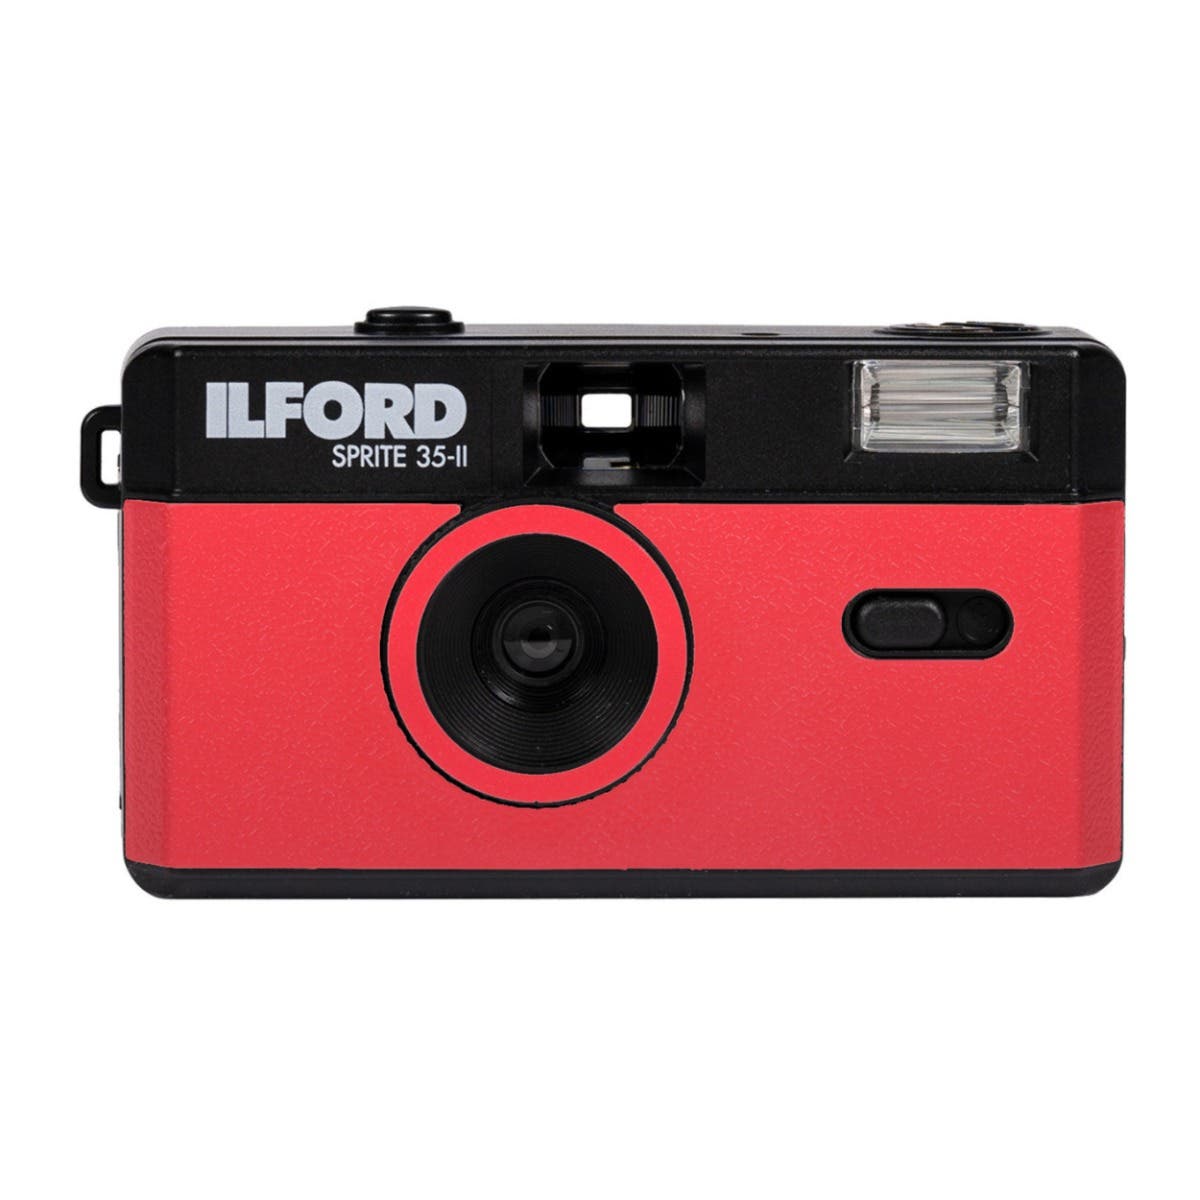 Ilford Sprite 35-II Reusable Camera (Black & Red) with Bonus Roll XP2 24 Exp Film